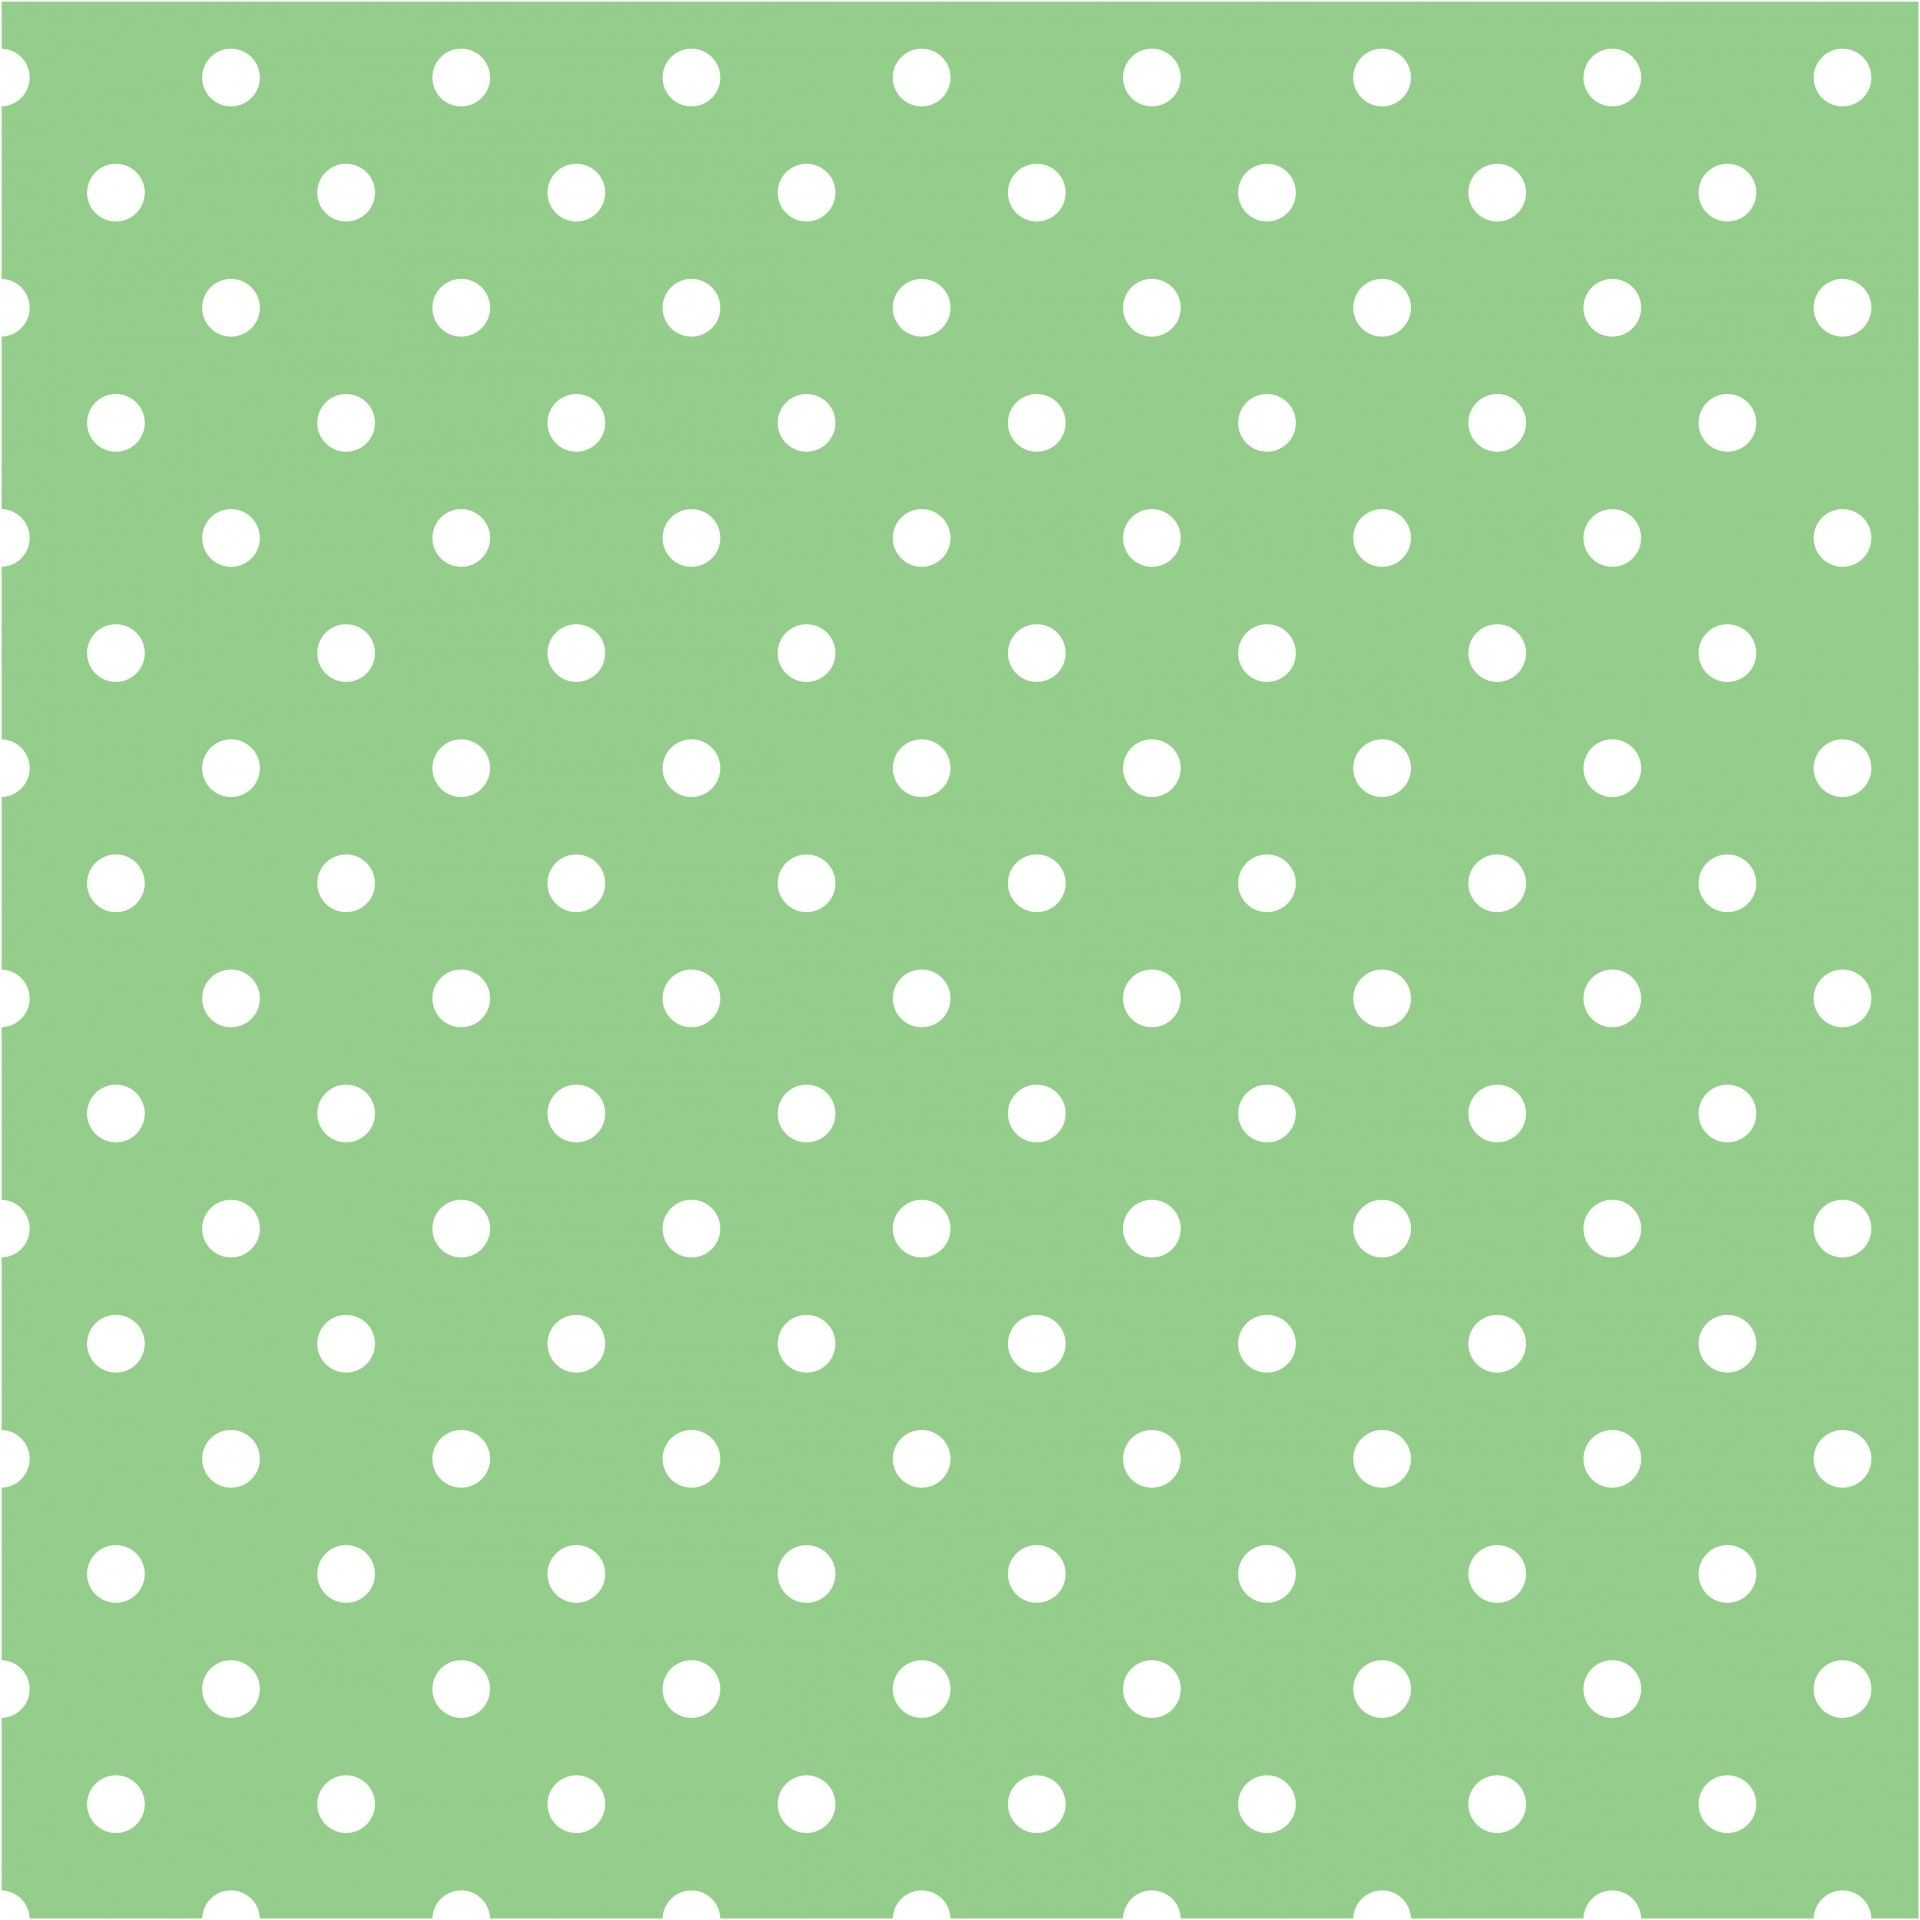 1920x1920 Green Polka Dot Background | Polka dot background, Pink polka dots background, Polka dots wallpaper